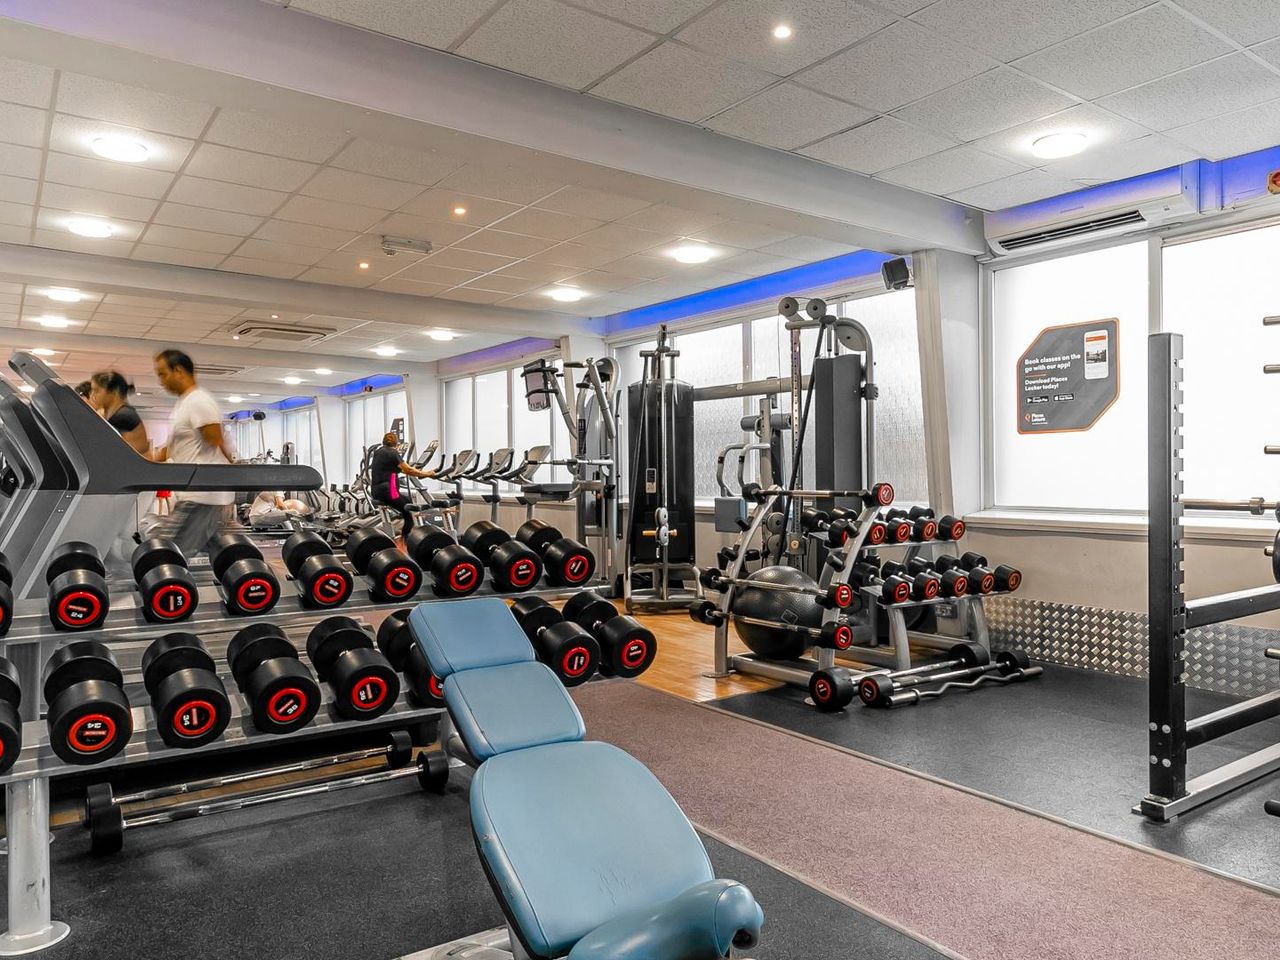 Gym equipment at Aldershot Pools & Fitness Centre